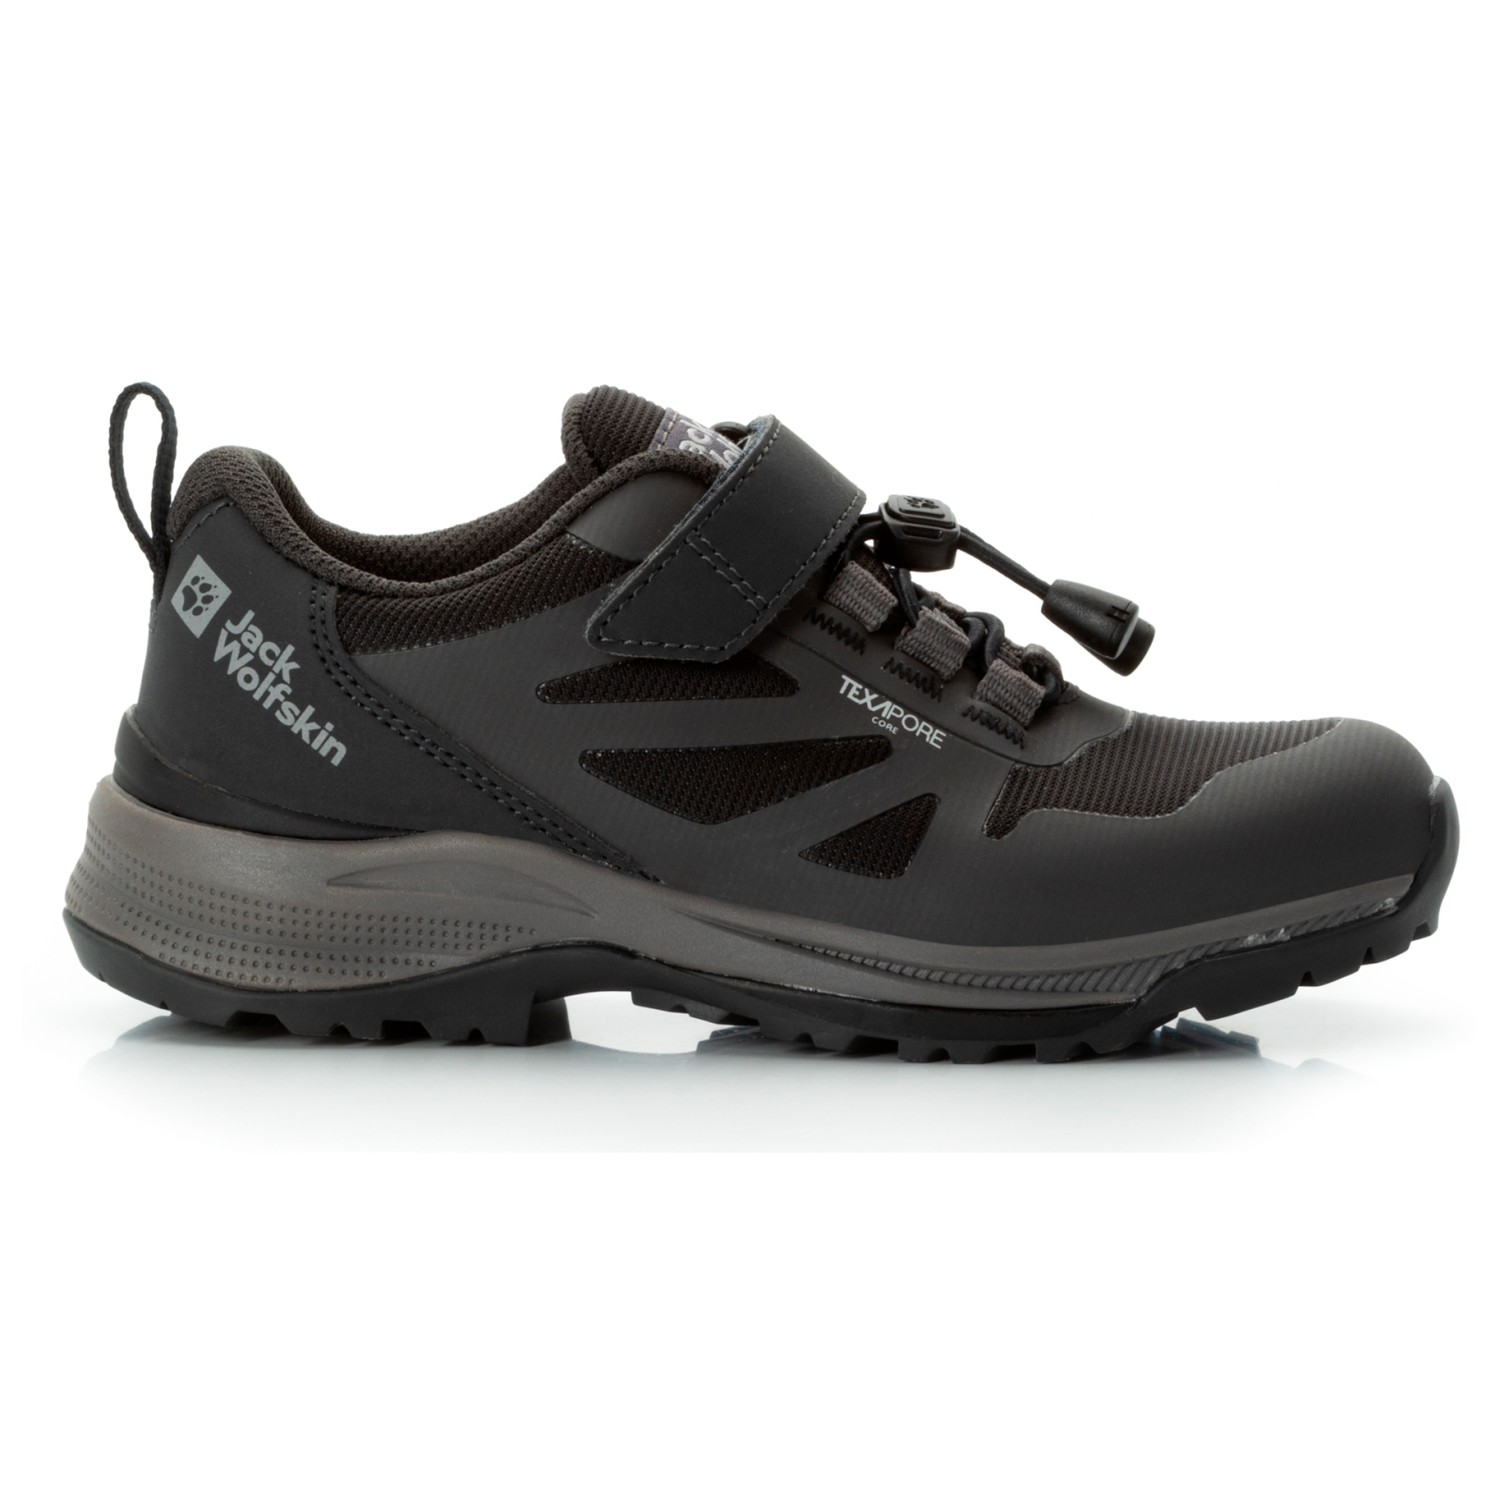 Мультиспортивная обувь Jack Wolfskin Kid's Vili Hiker Texapore Low, черный цена и фото